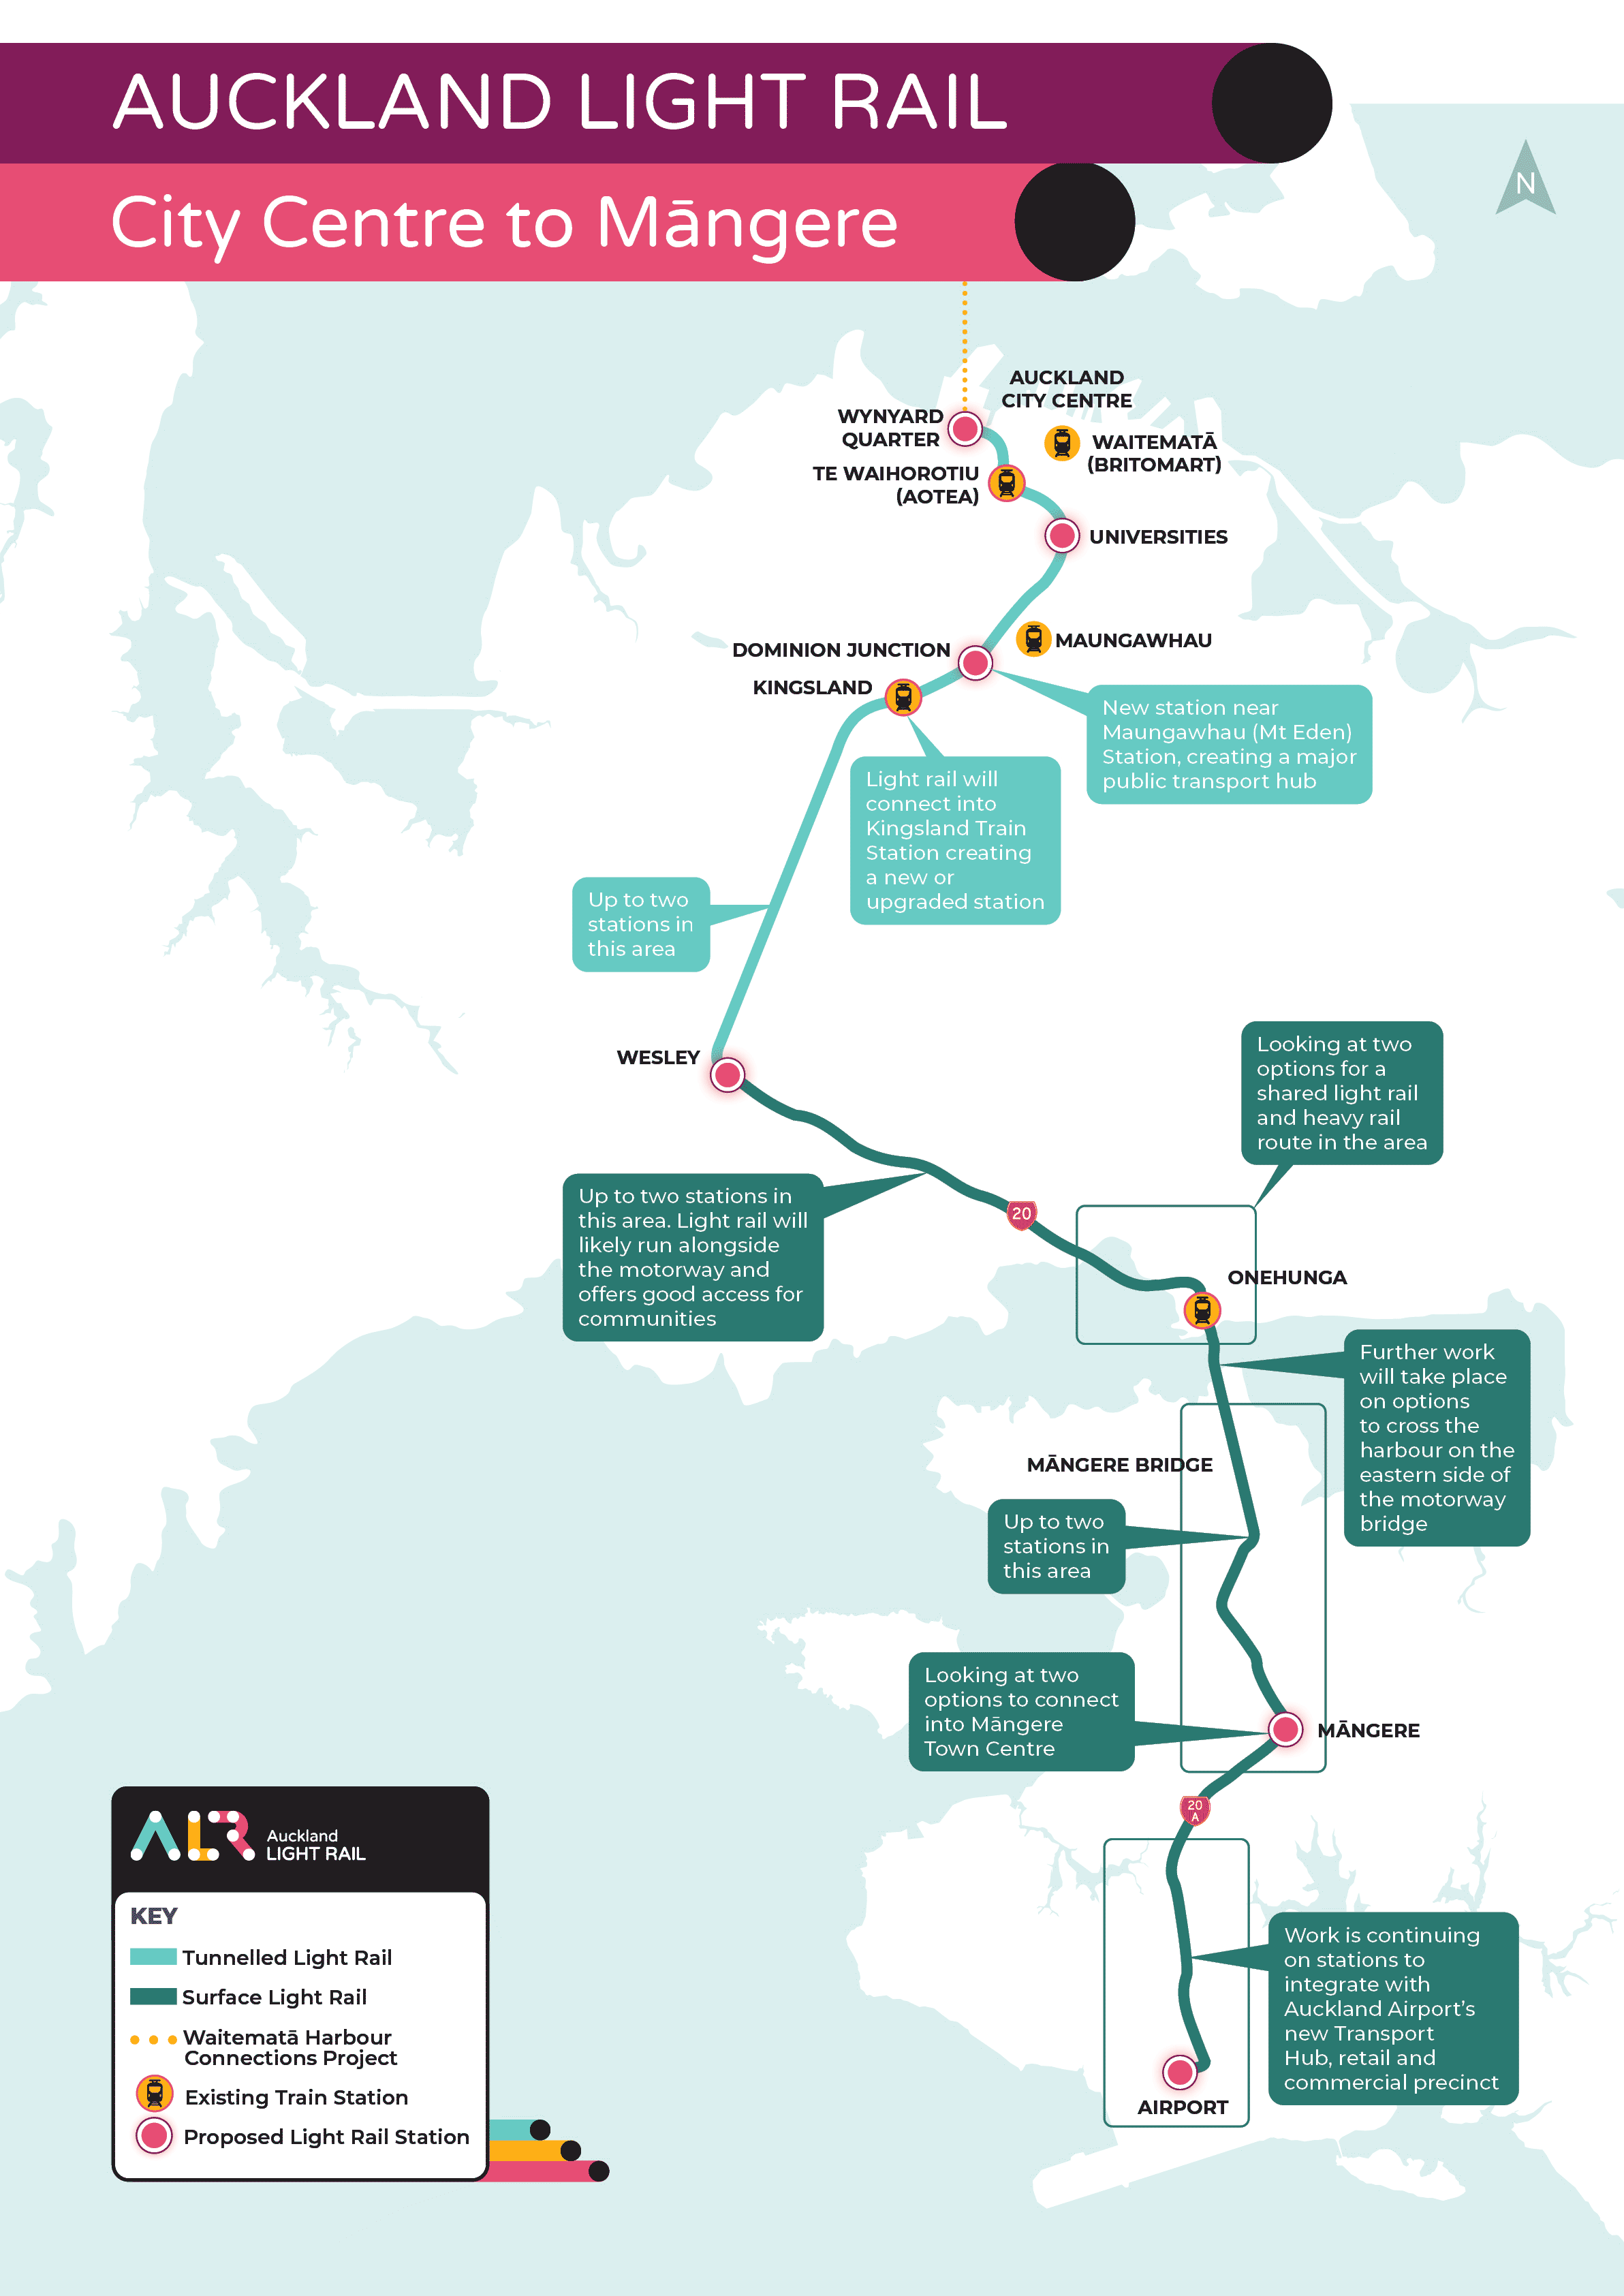 The Light Rail route